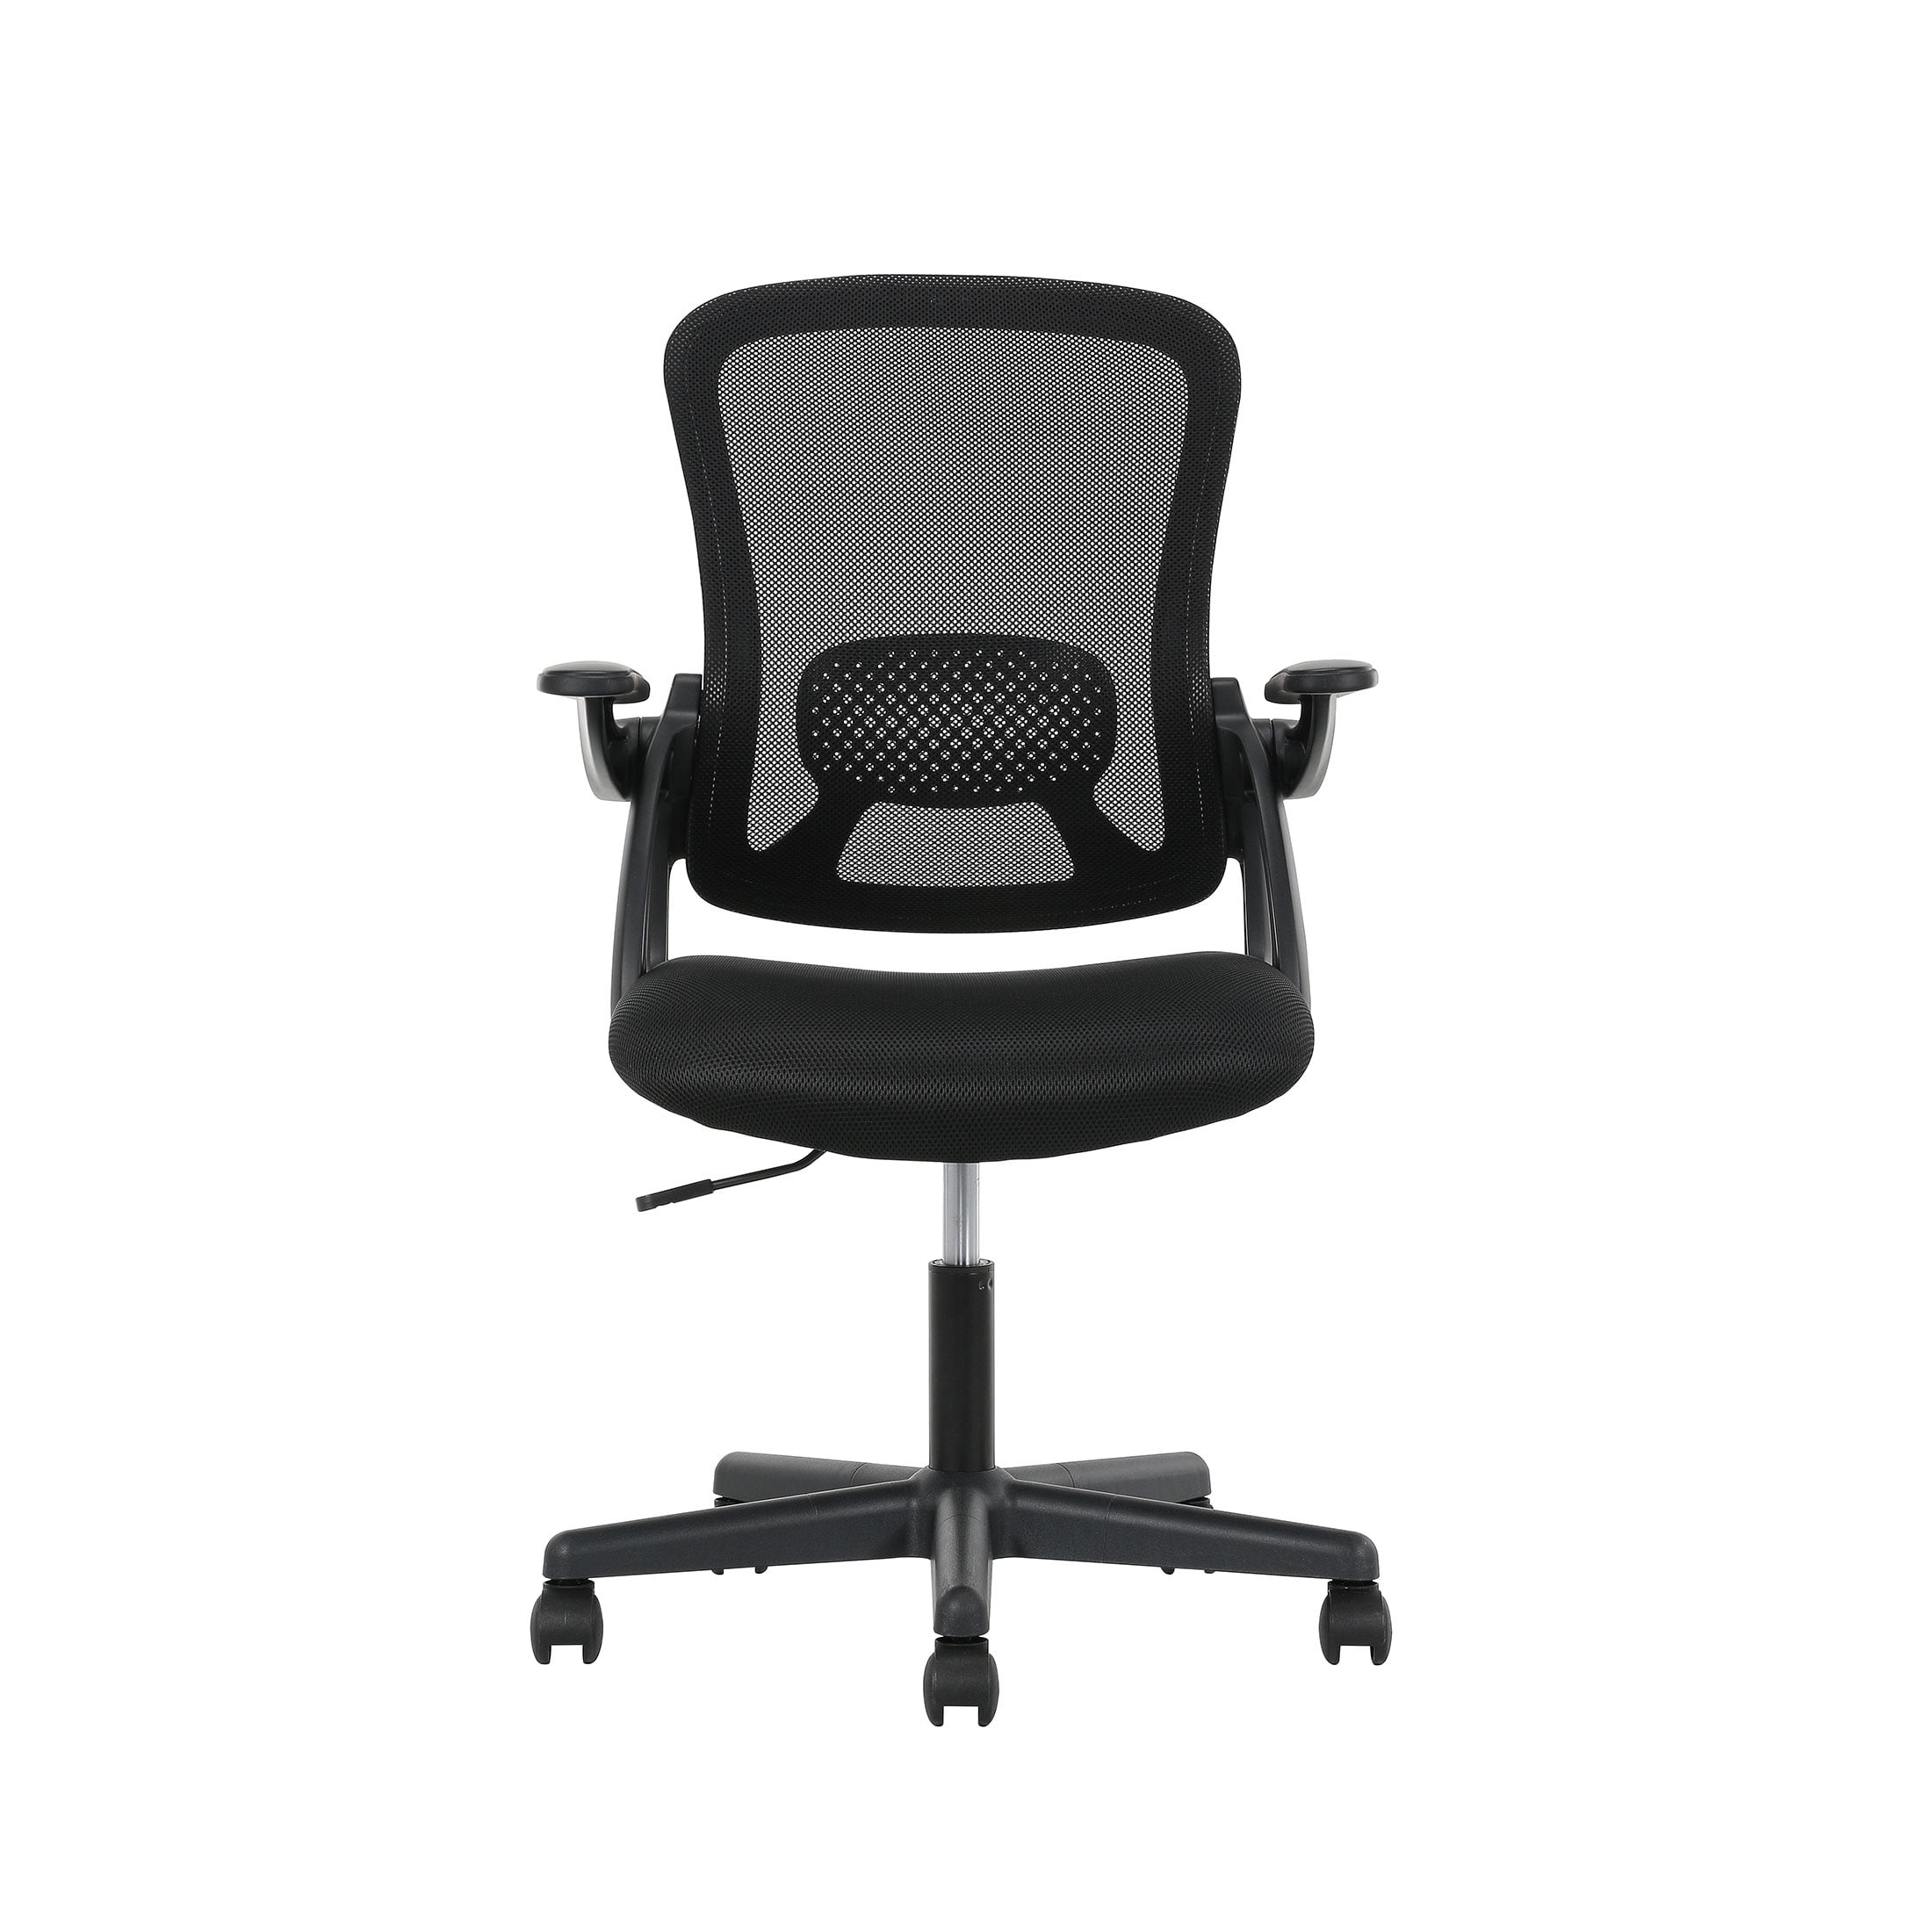 Mainstays Ergonomic Office Chair with Adjustable Headrest, Black Fabric,  275 lb capacity